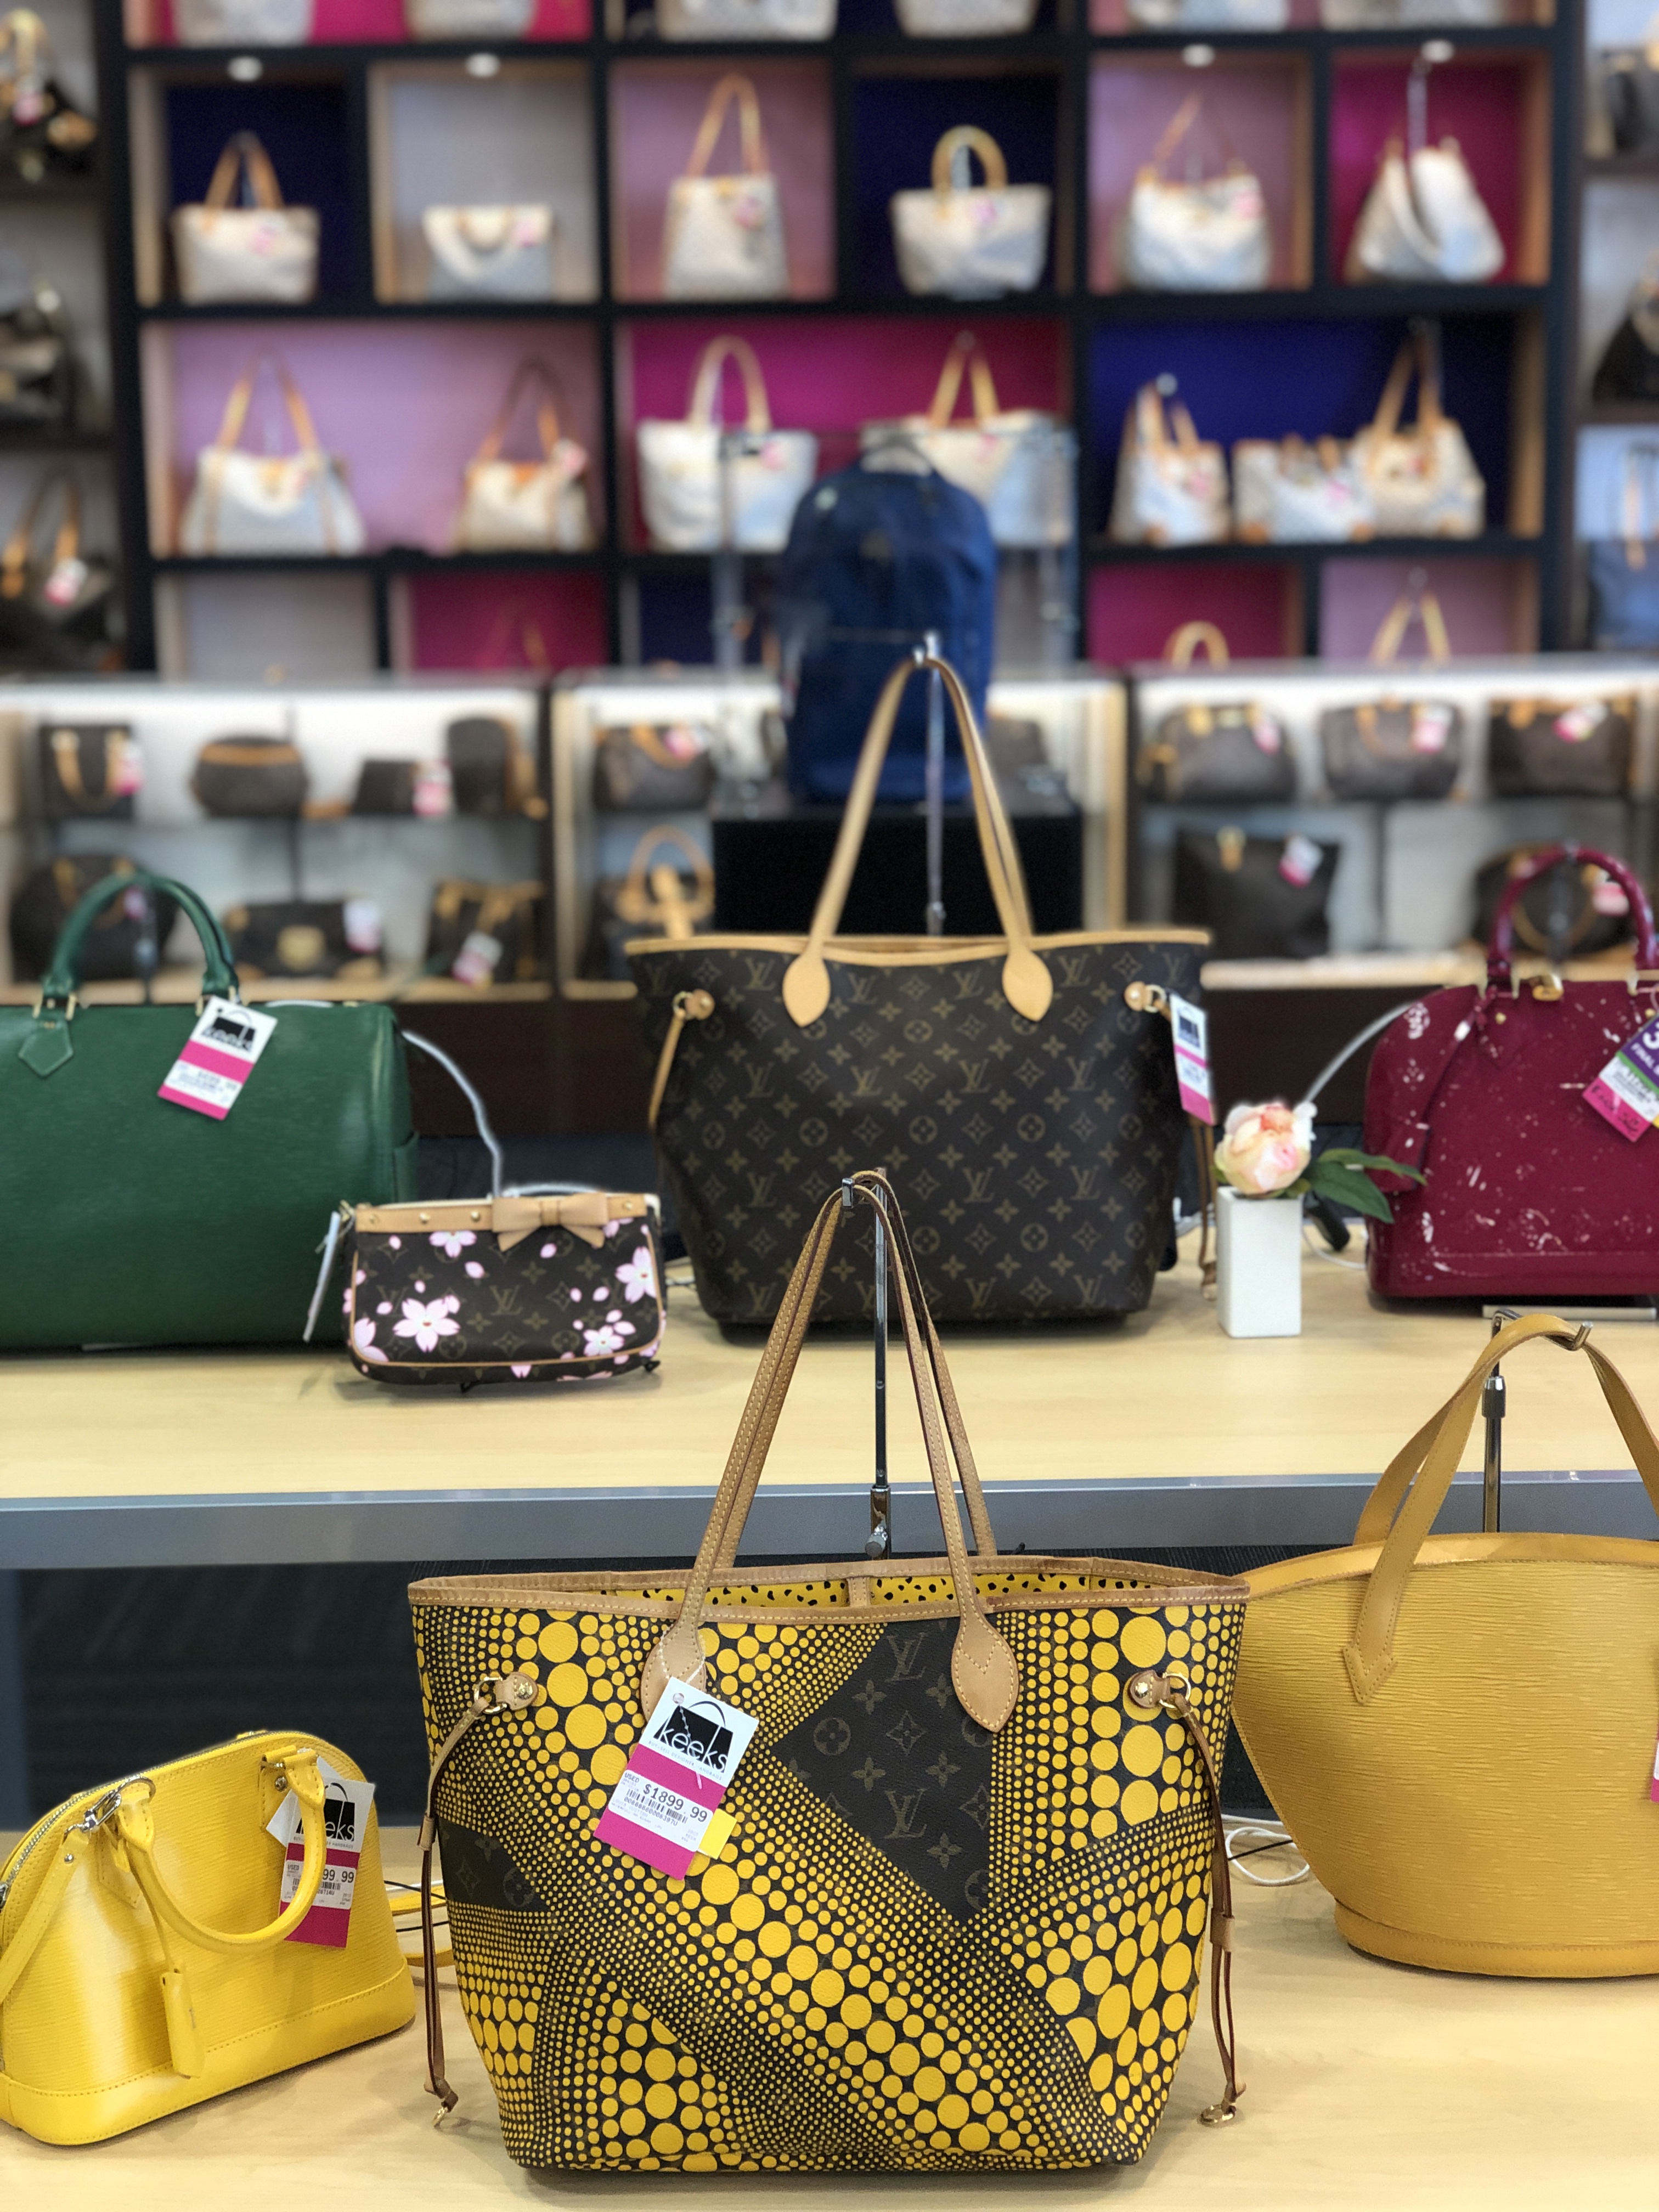 Keeks Buy + Sell Designer Handbags - Buy + Sell Authentic Designer